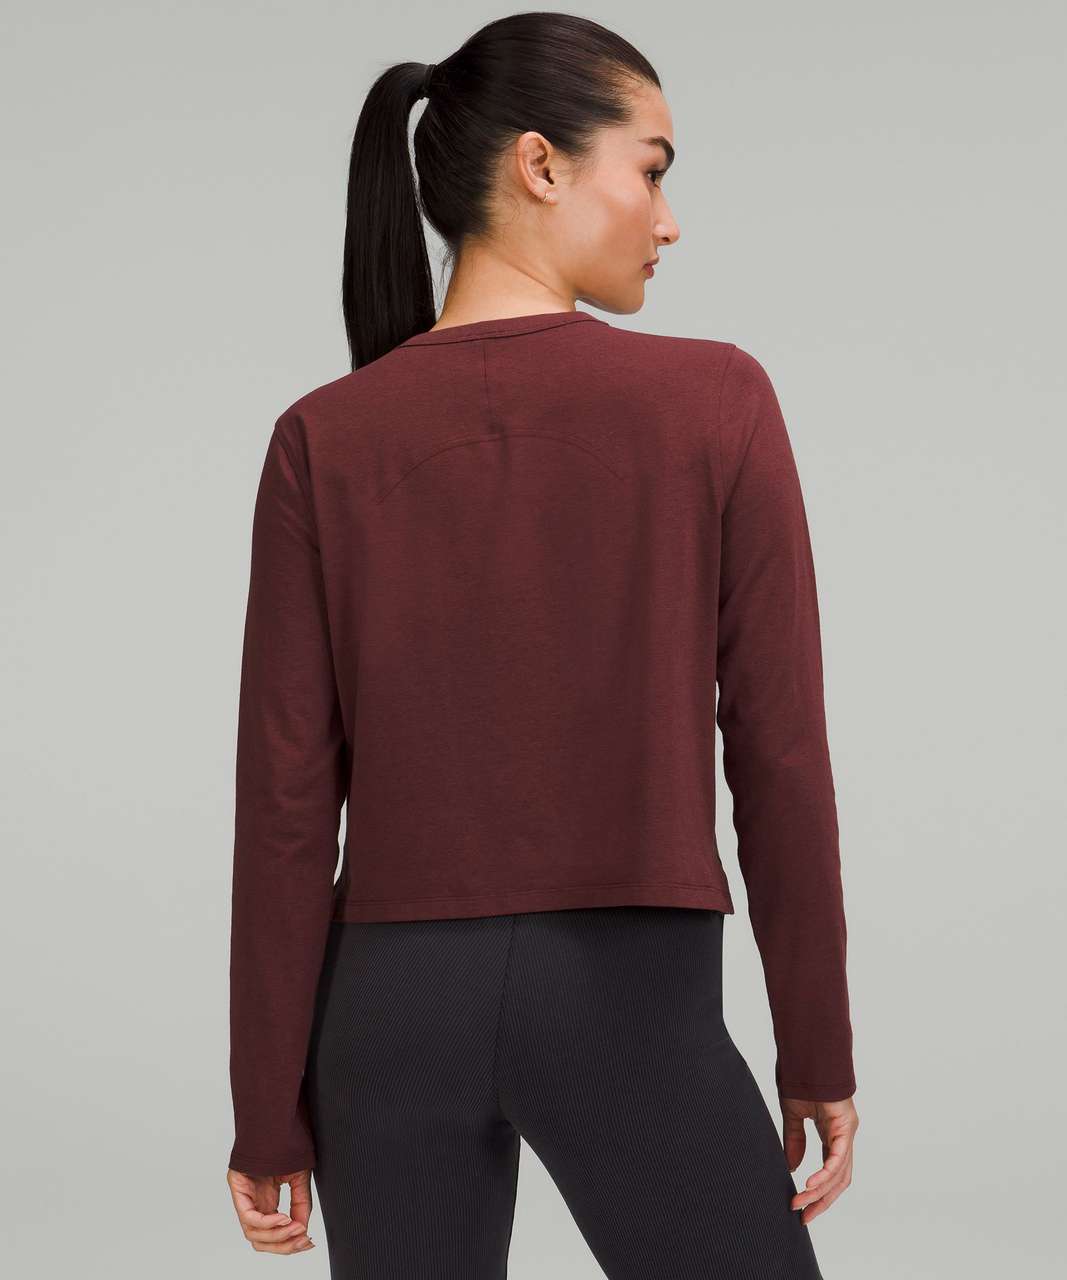 Lululemon Classic-Fit Cotton-Blend Long Sleeve Shirt - Red Merlot